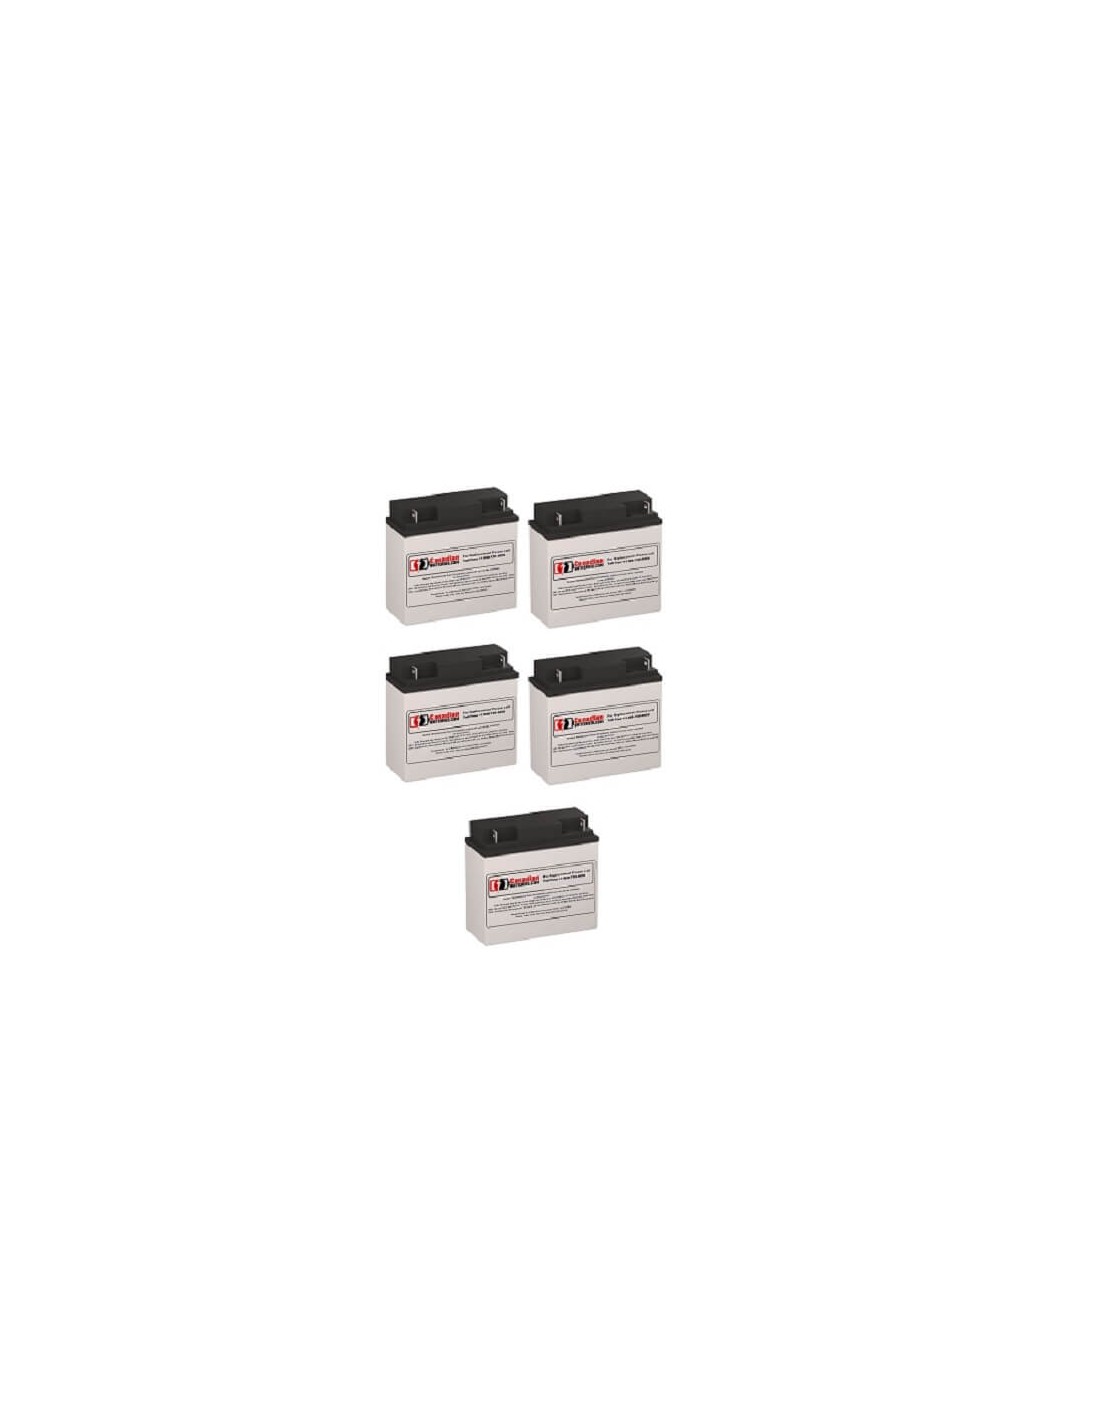 Batteries for Mitsubishi 7011ar-30-b UPS, 5 x 12V, 18Ah - 216Wh